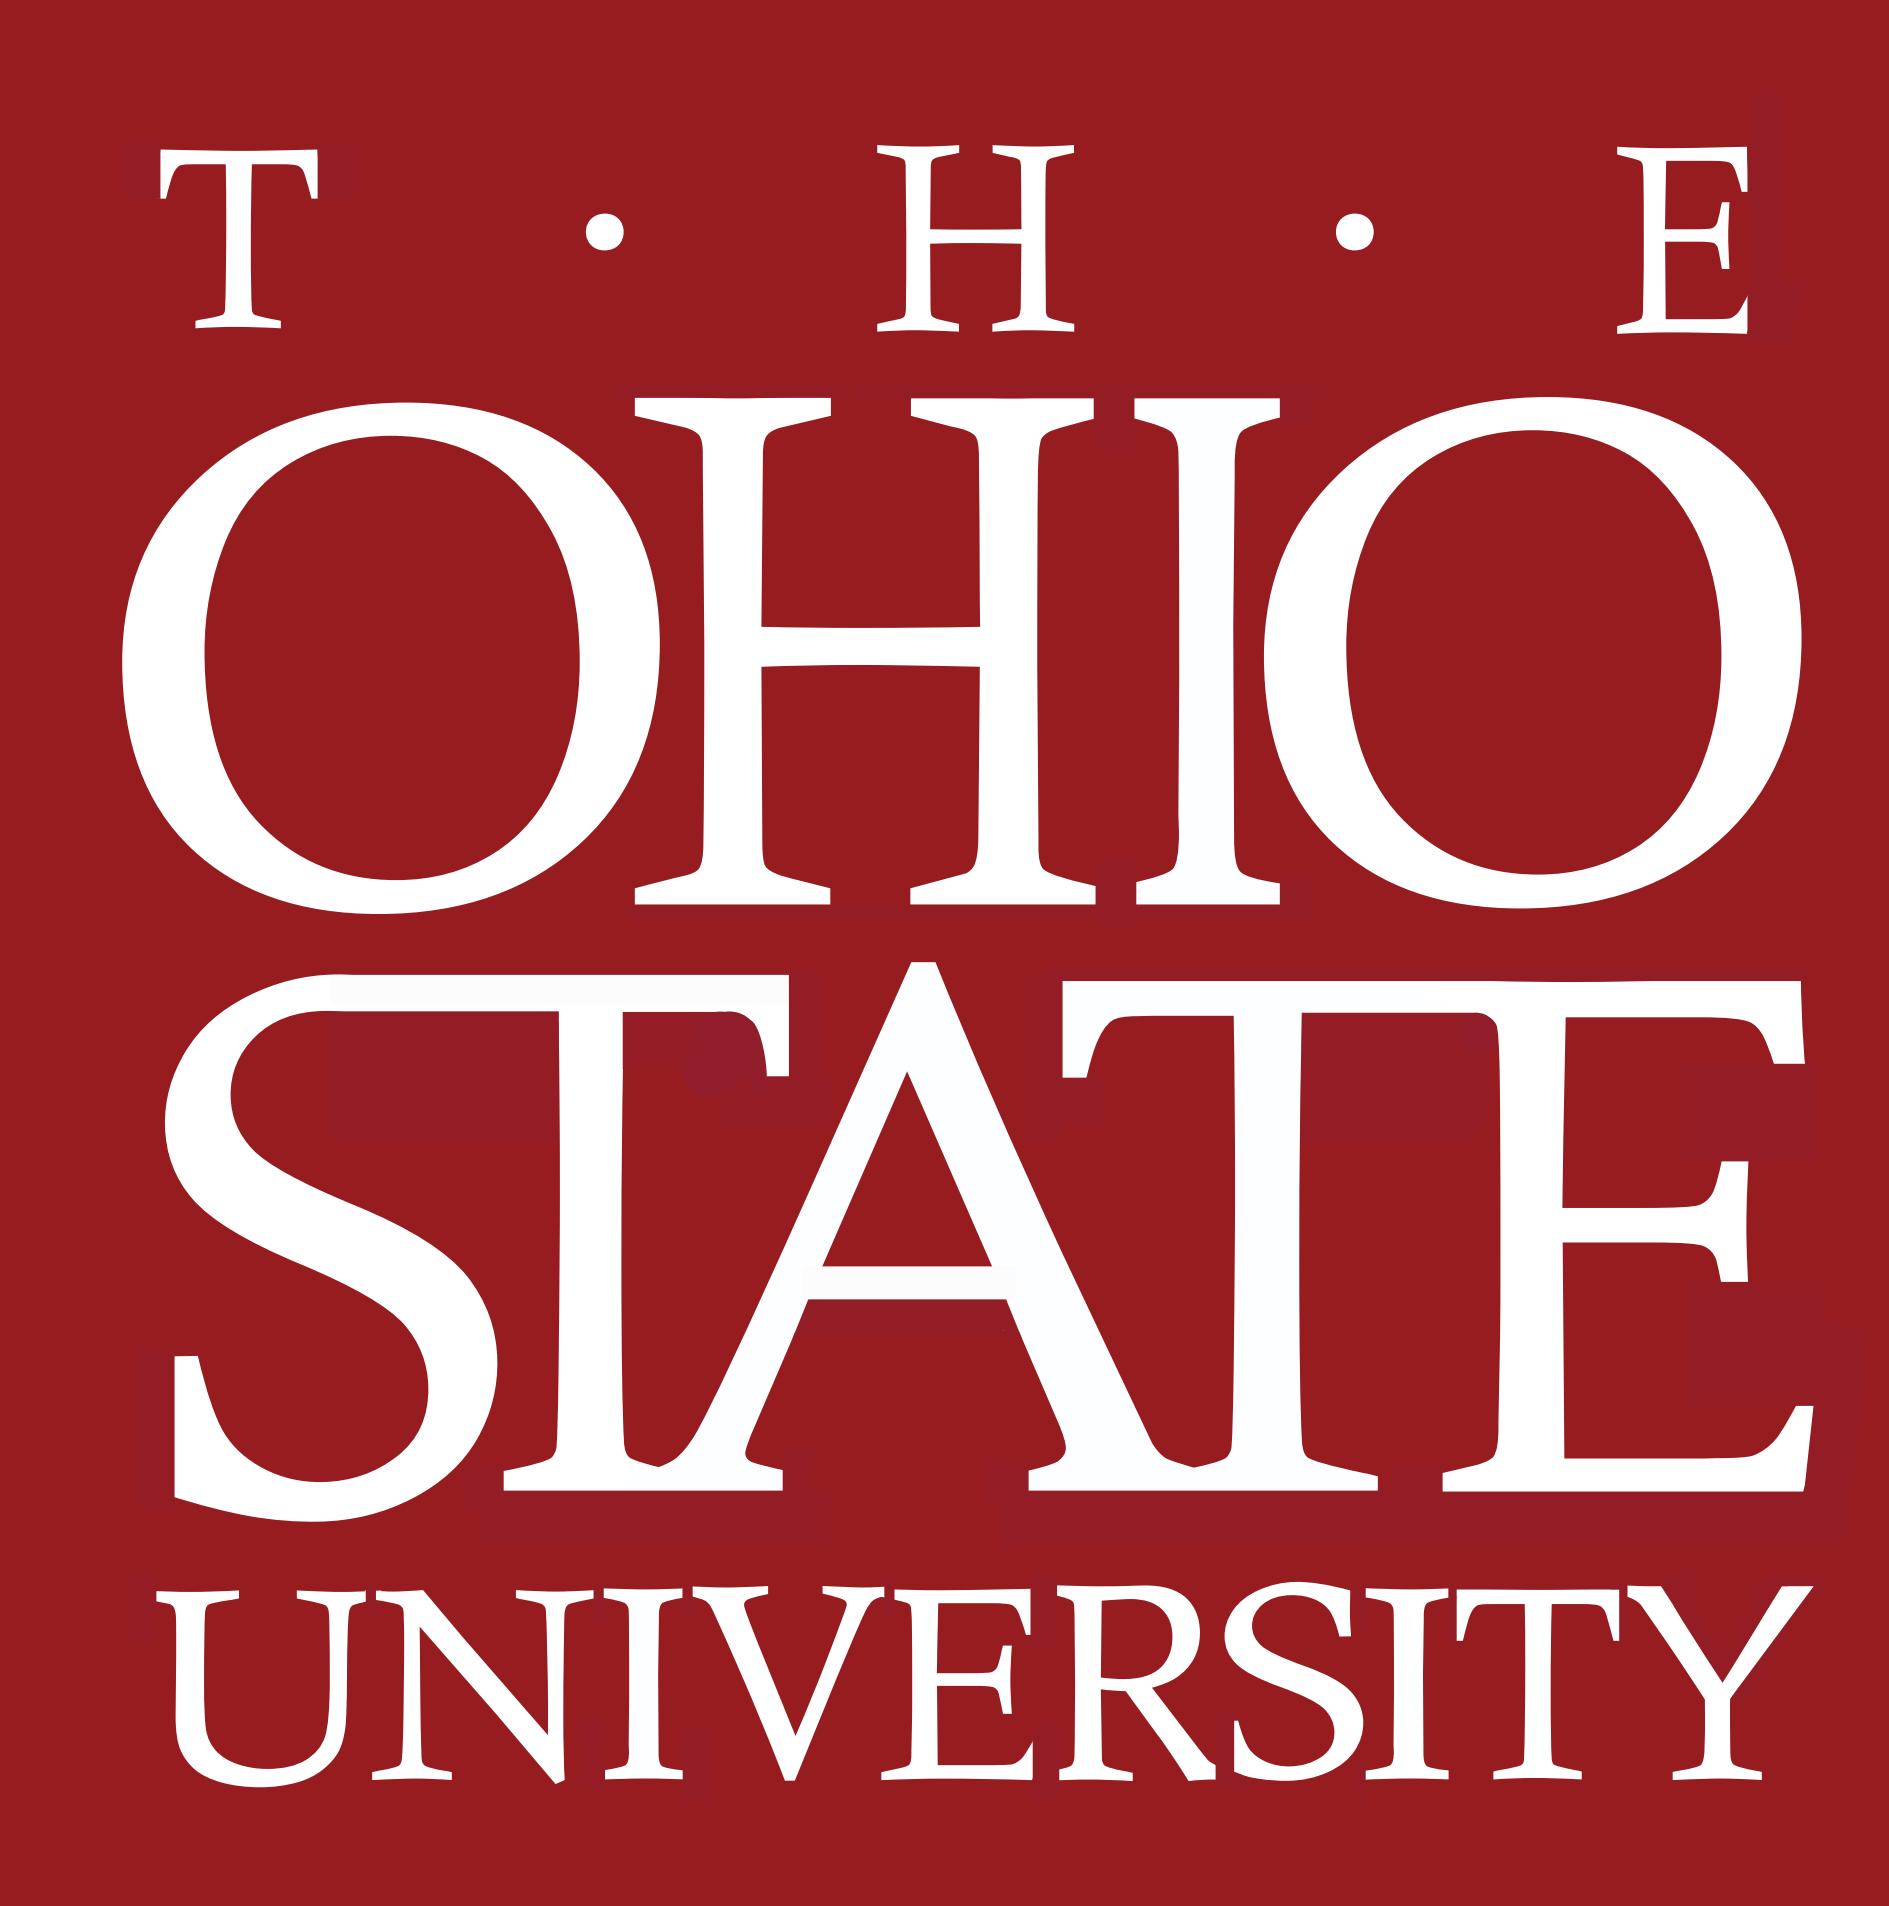 Ohio university logo clip art.